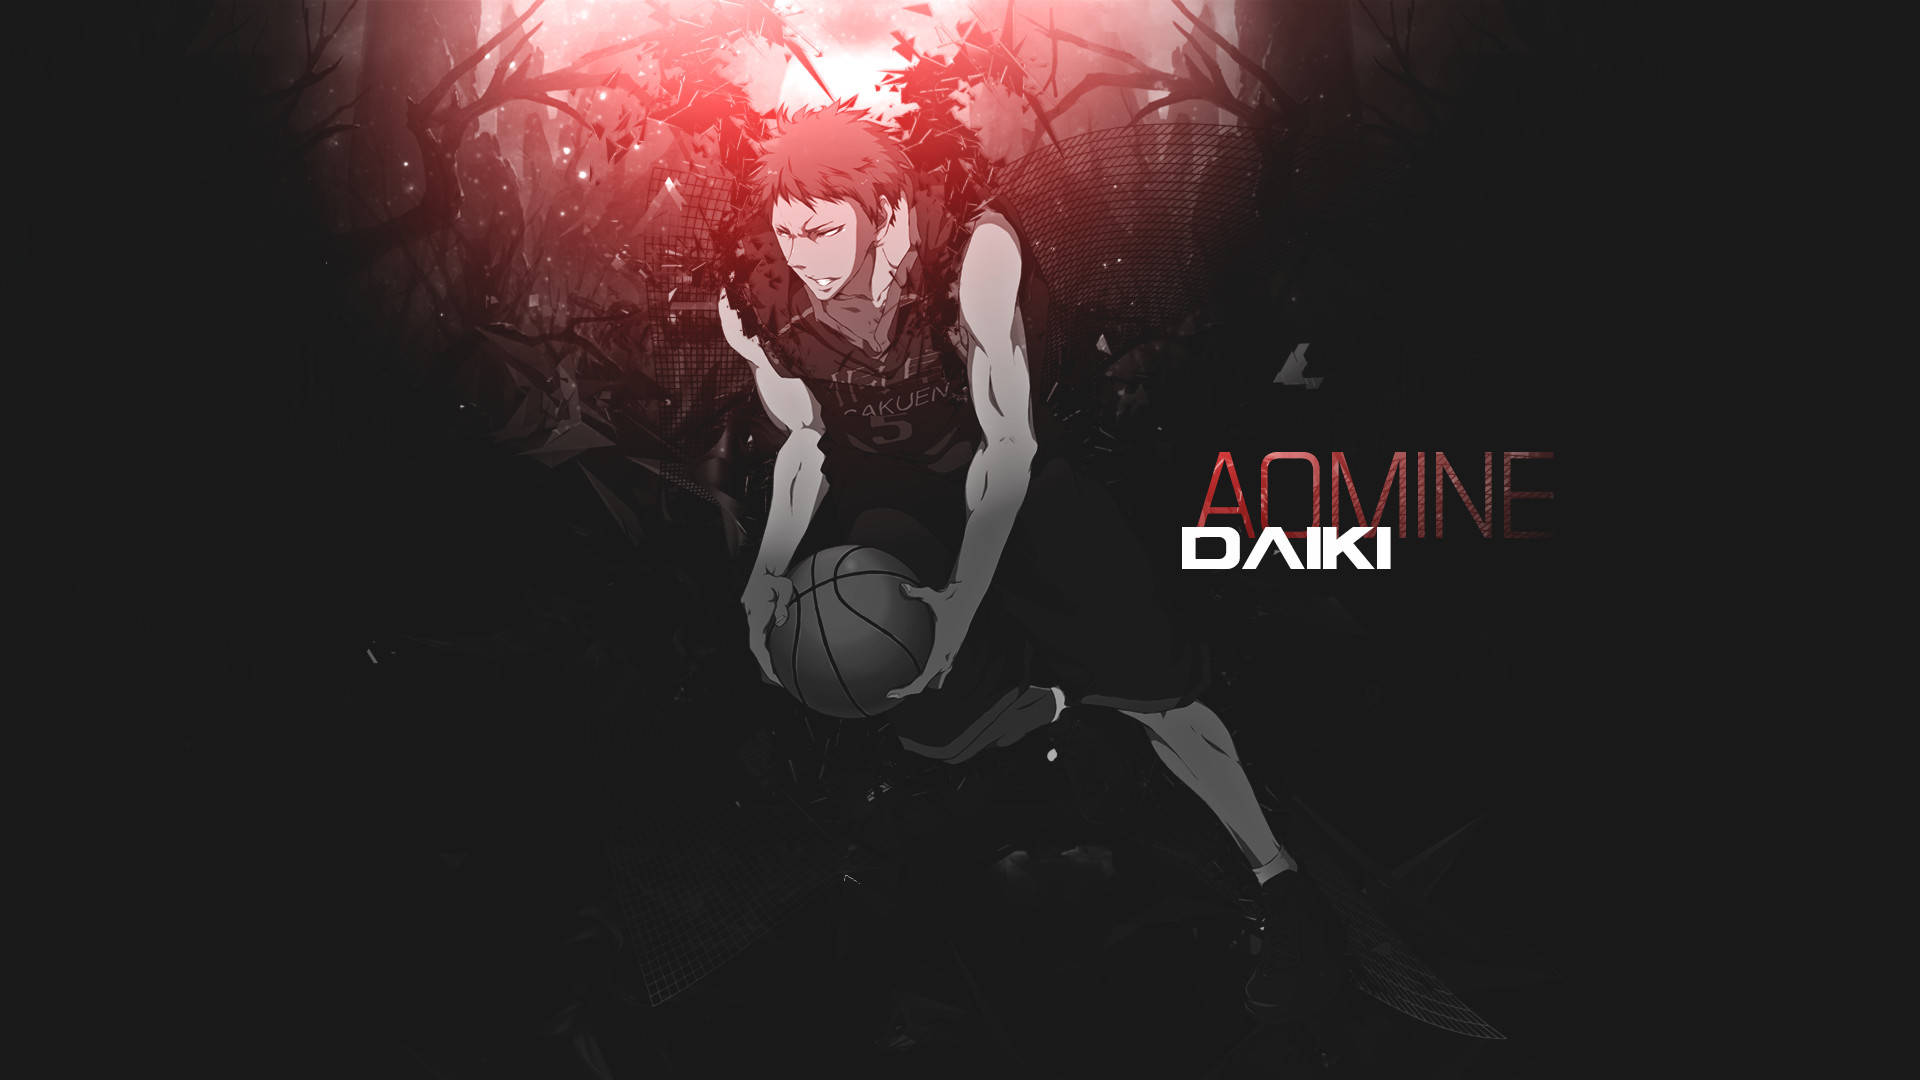 Aomine Daiki From Kuroko's Basketball Background